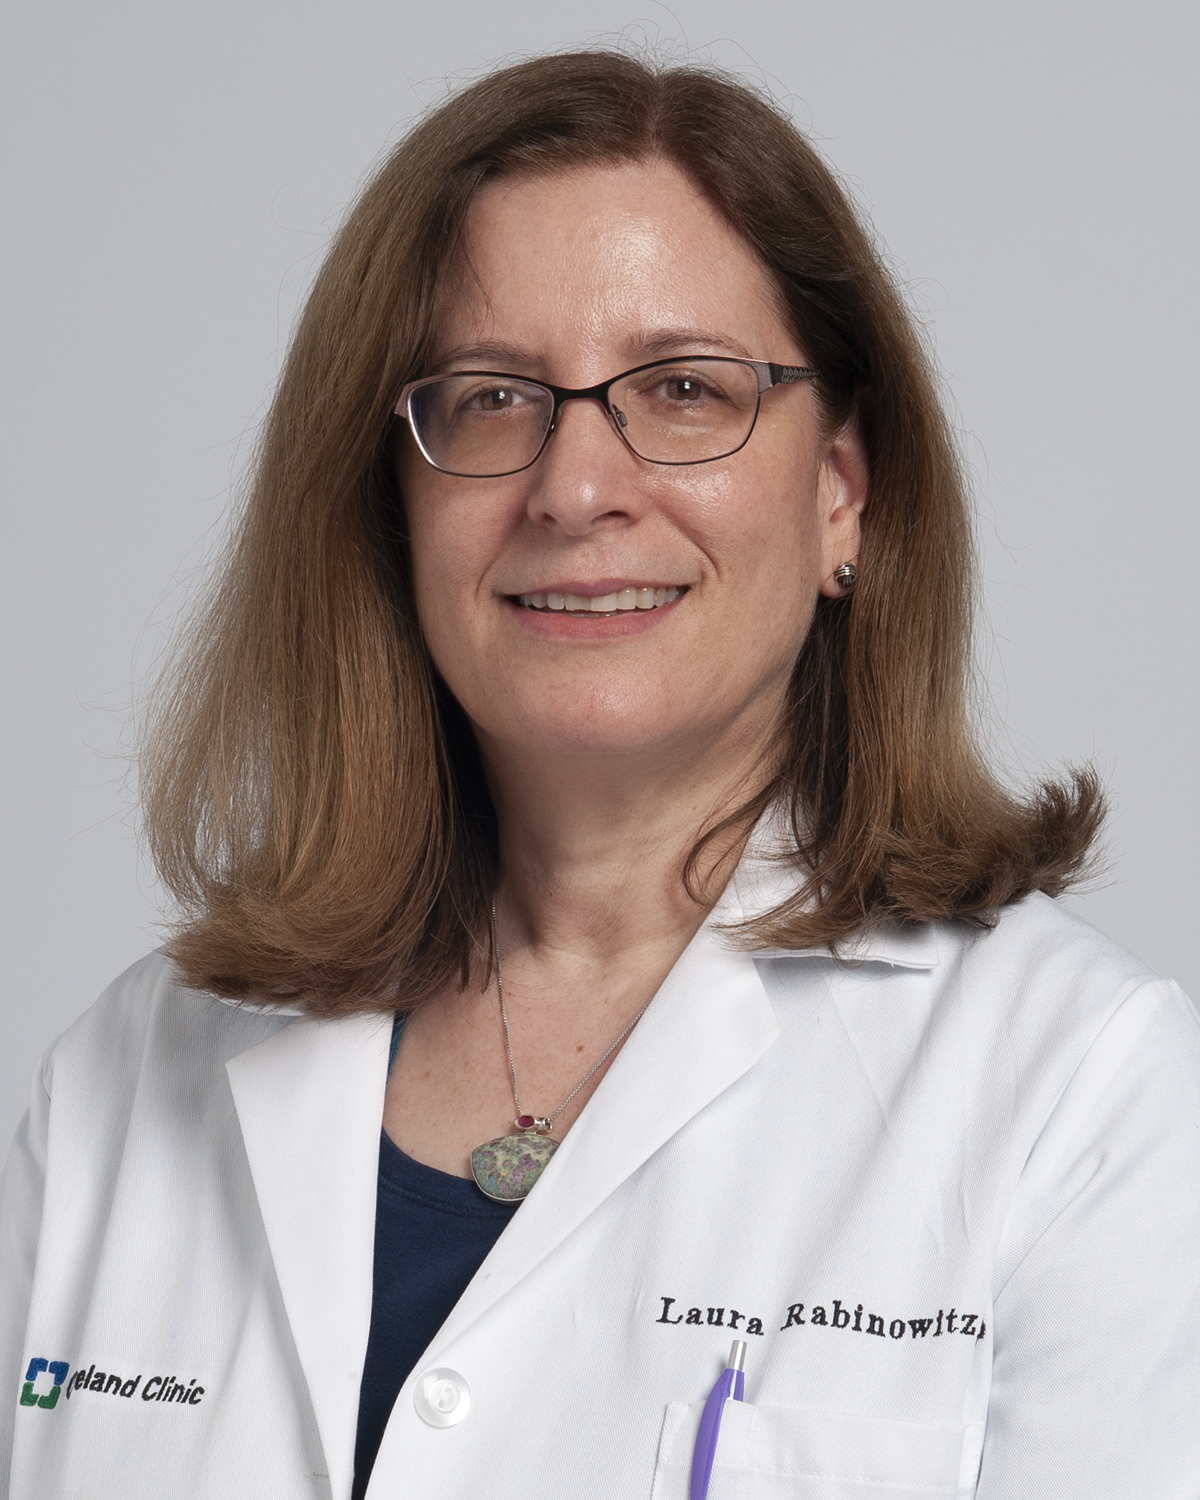 Laura O. Rabinowitz, M.D.